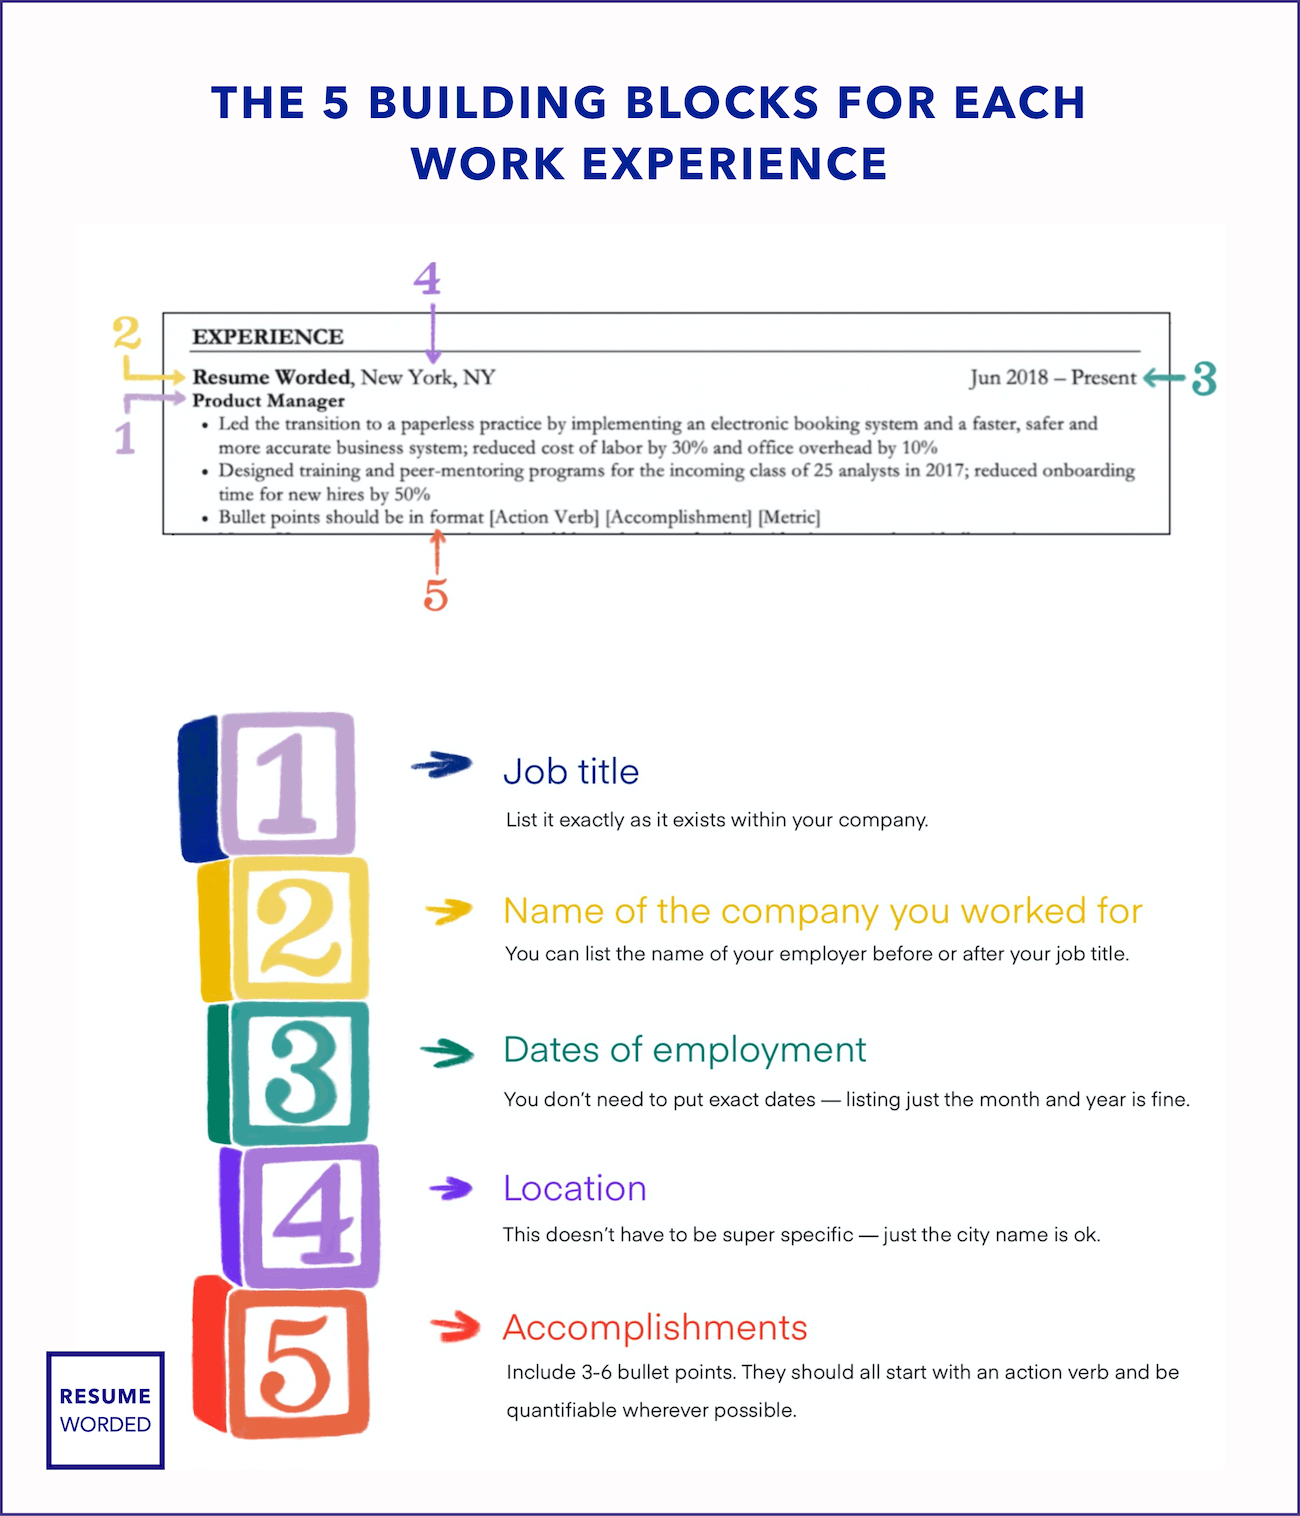 Focus on ICU experience - ICU Nurse Resume